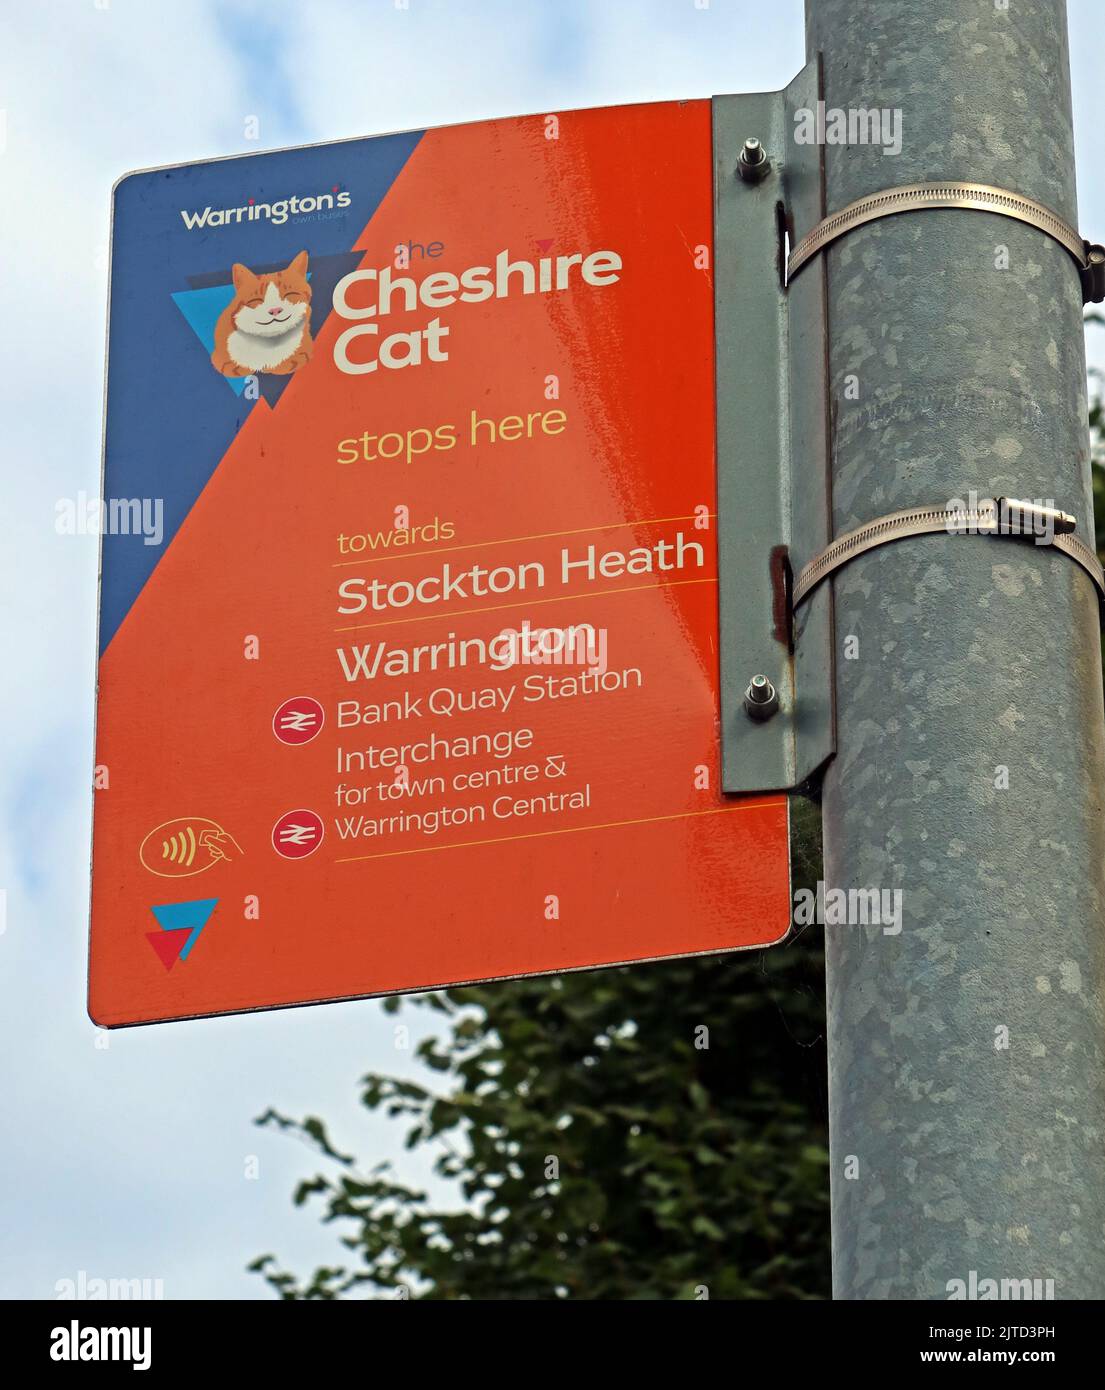 Warringtons eigene Busse, Bushaltestelle für den Cheshire Cat Bus Service, Richtung Stockton Heath & Bank Quay, Cheshire, England, UK, WA4 Stockfoto